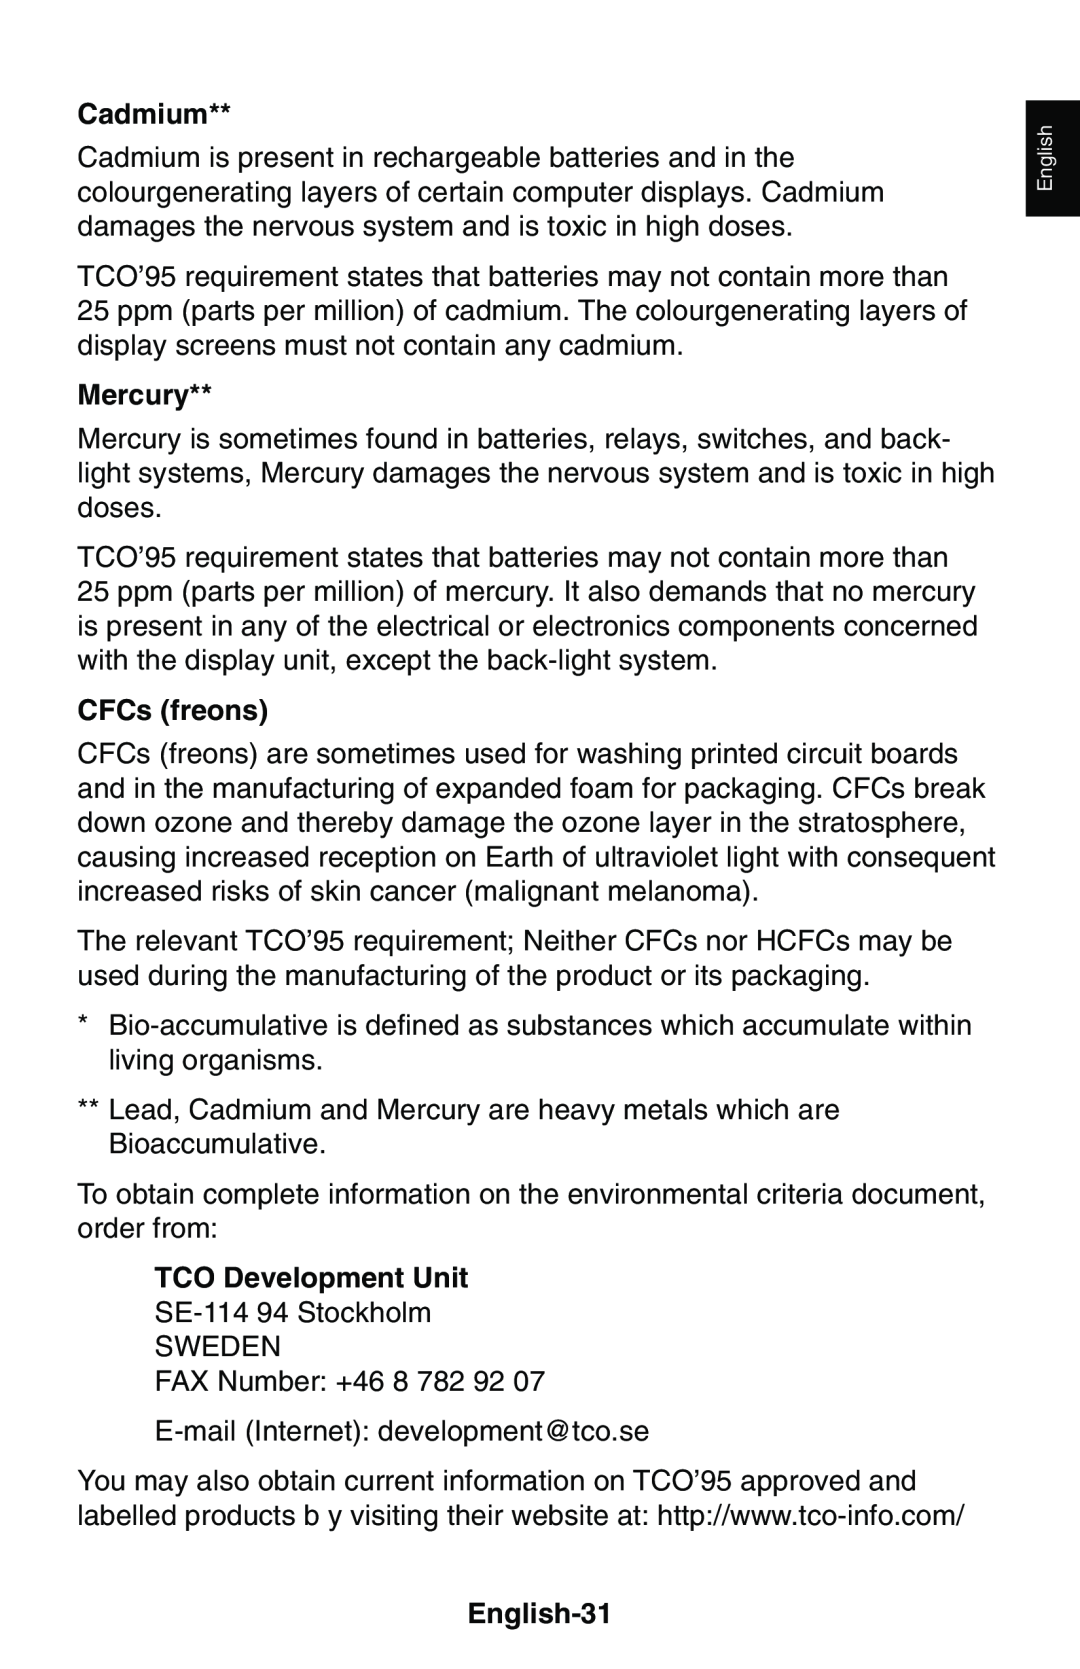 NEC LCD1850E user manual Cadmium, Mercury, CFCs freons, TCO Development Unit, English-31 